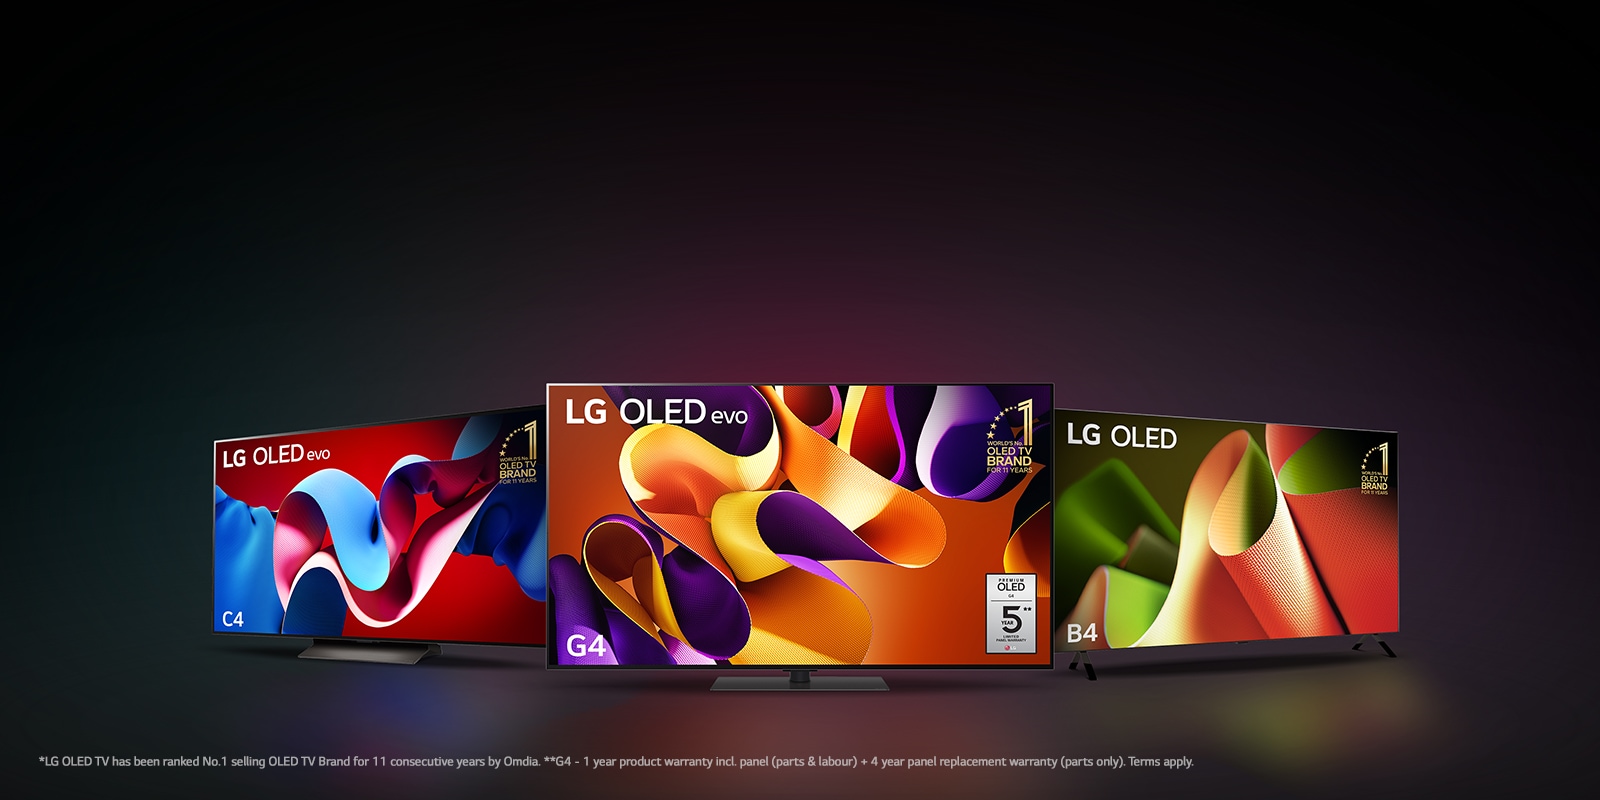 Introducing the NEW LG OLED TV Range1